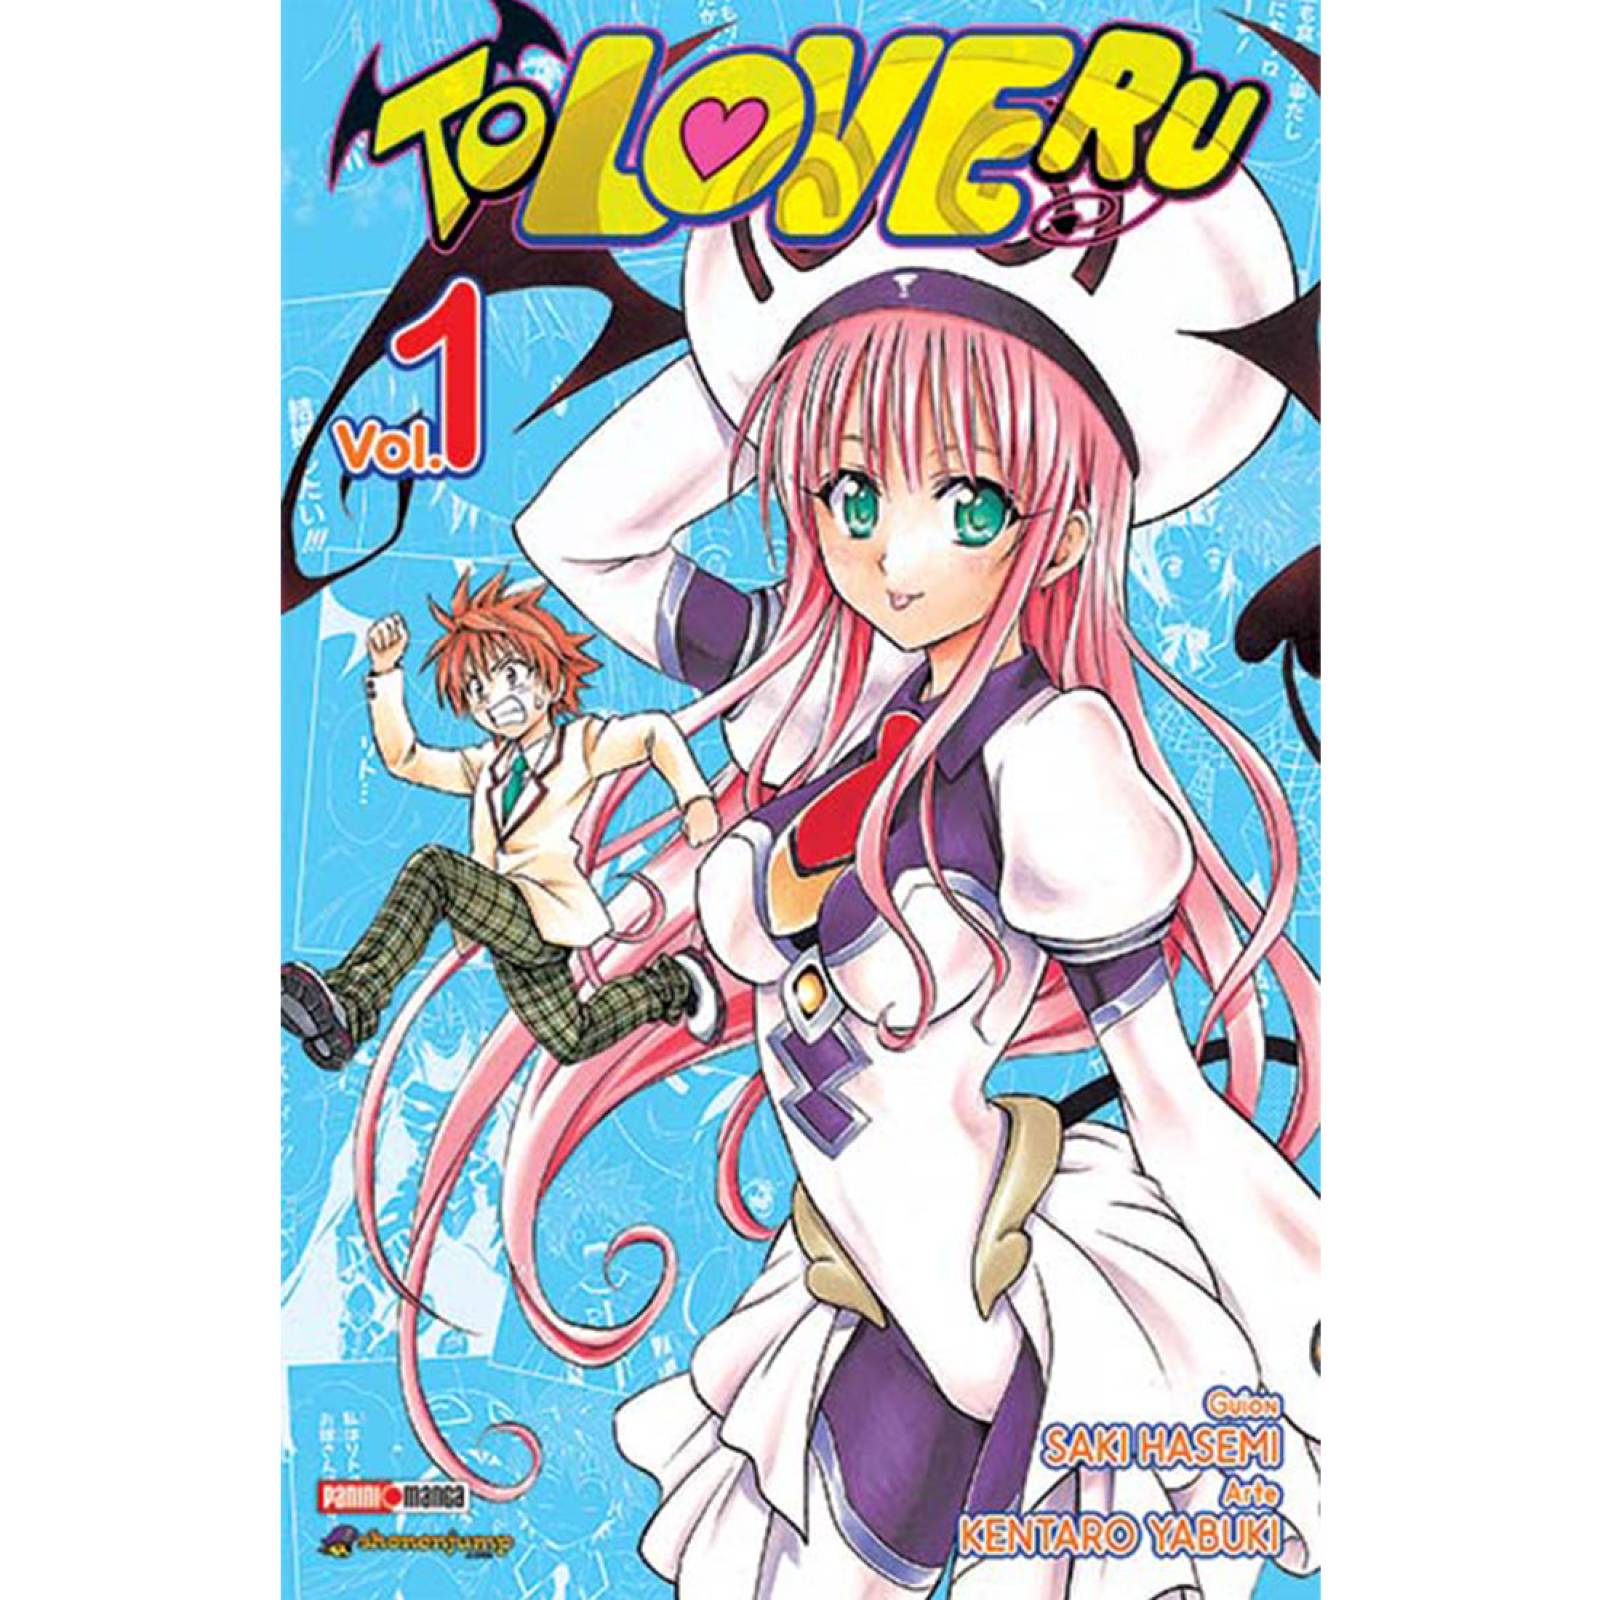 Panini Manga To Love-Ru Saki Hasemi, Kentaro Yabuki